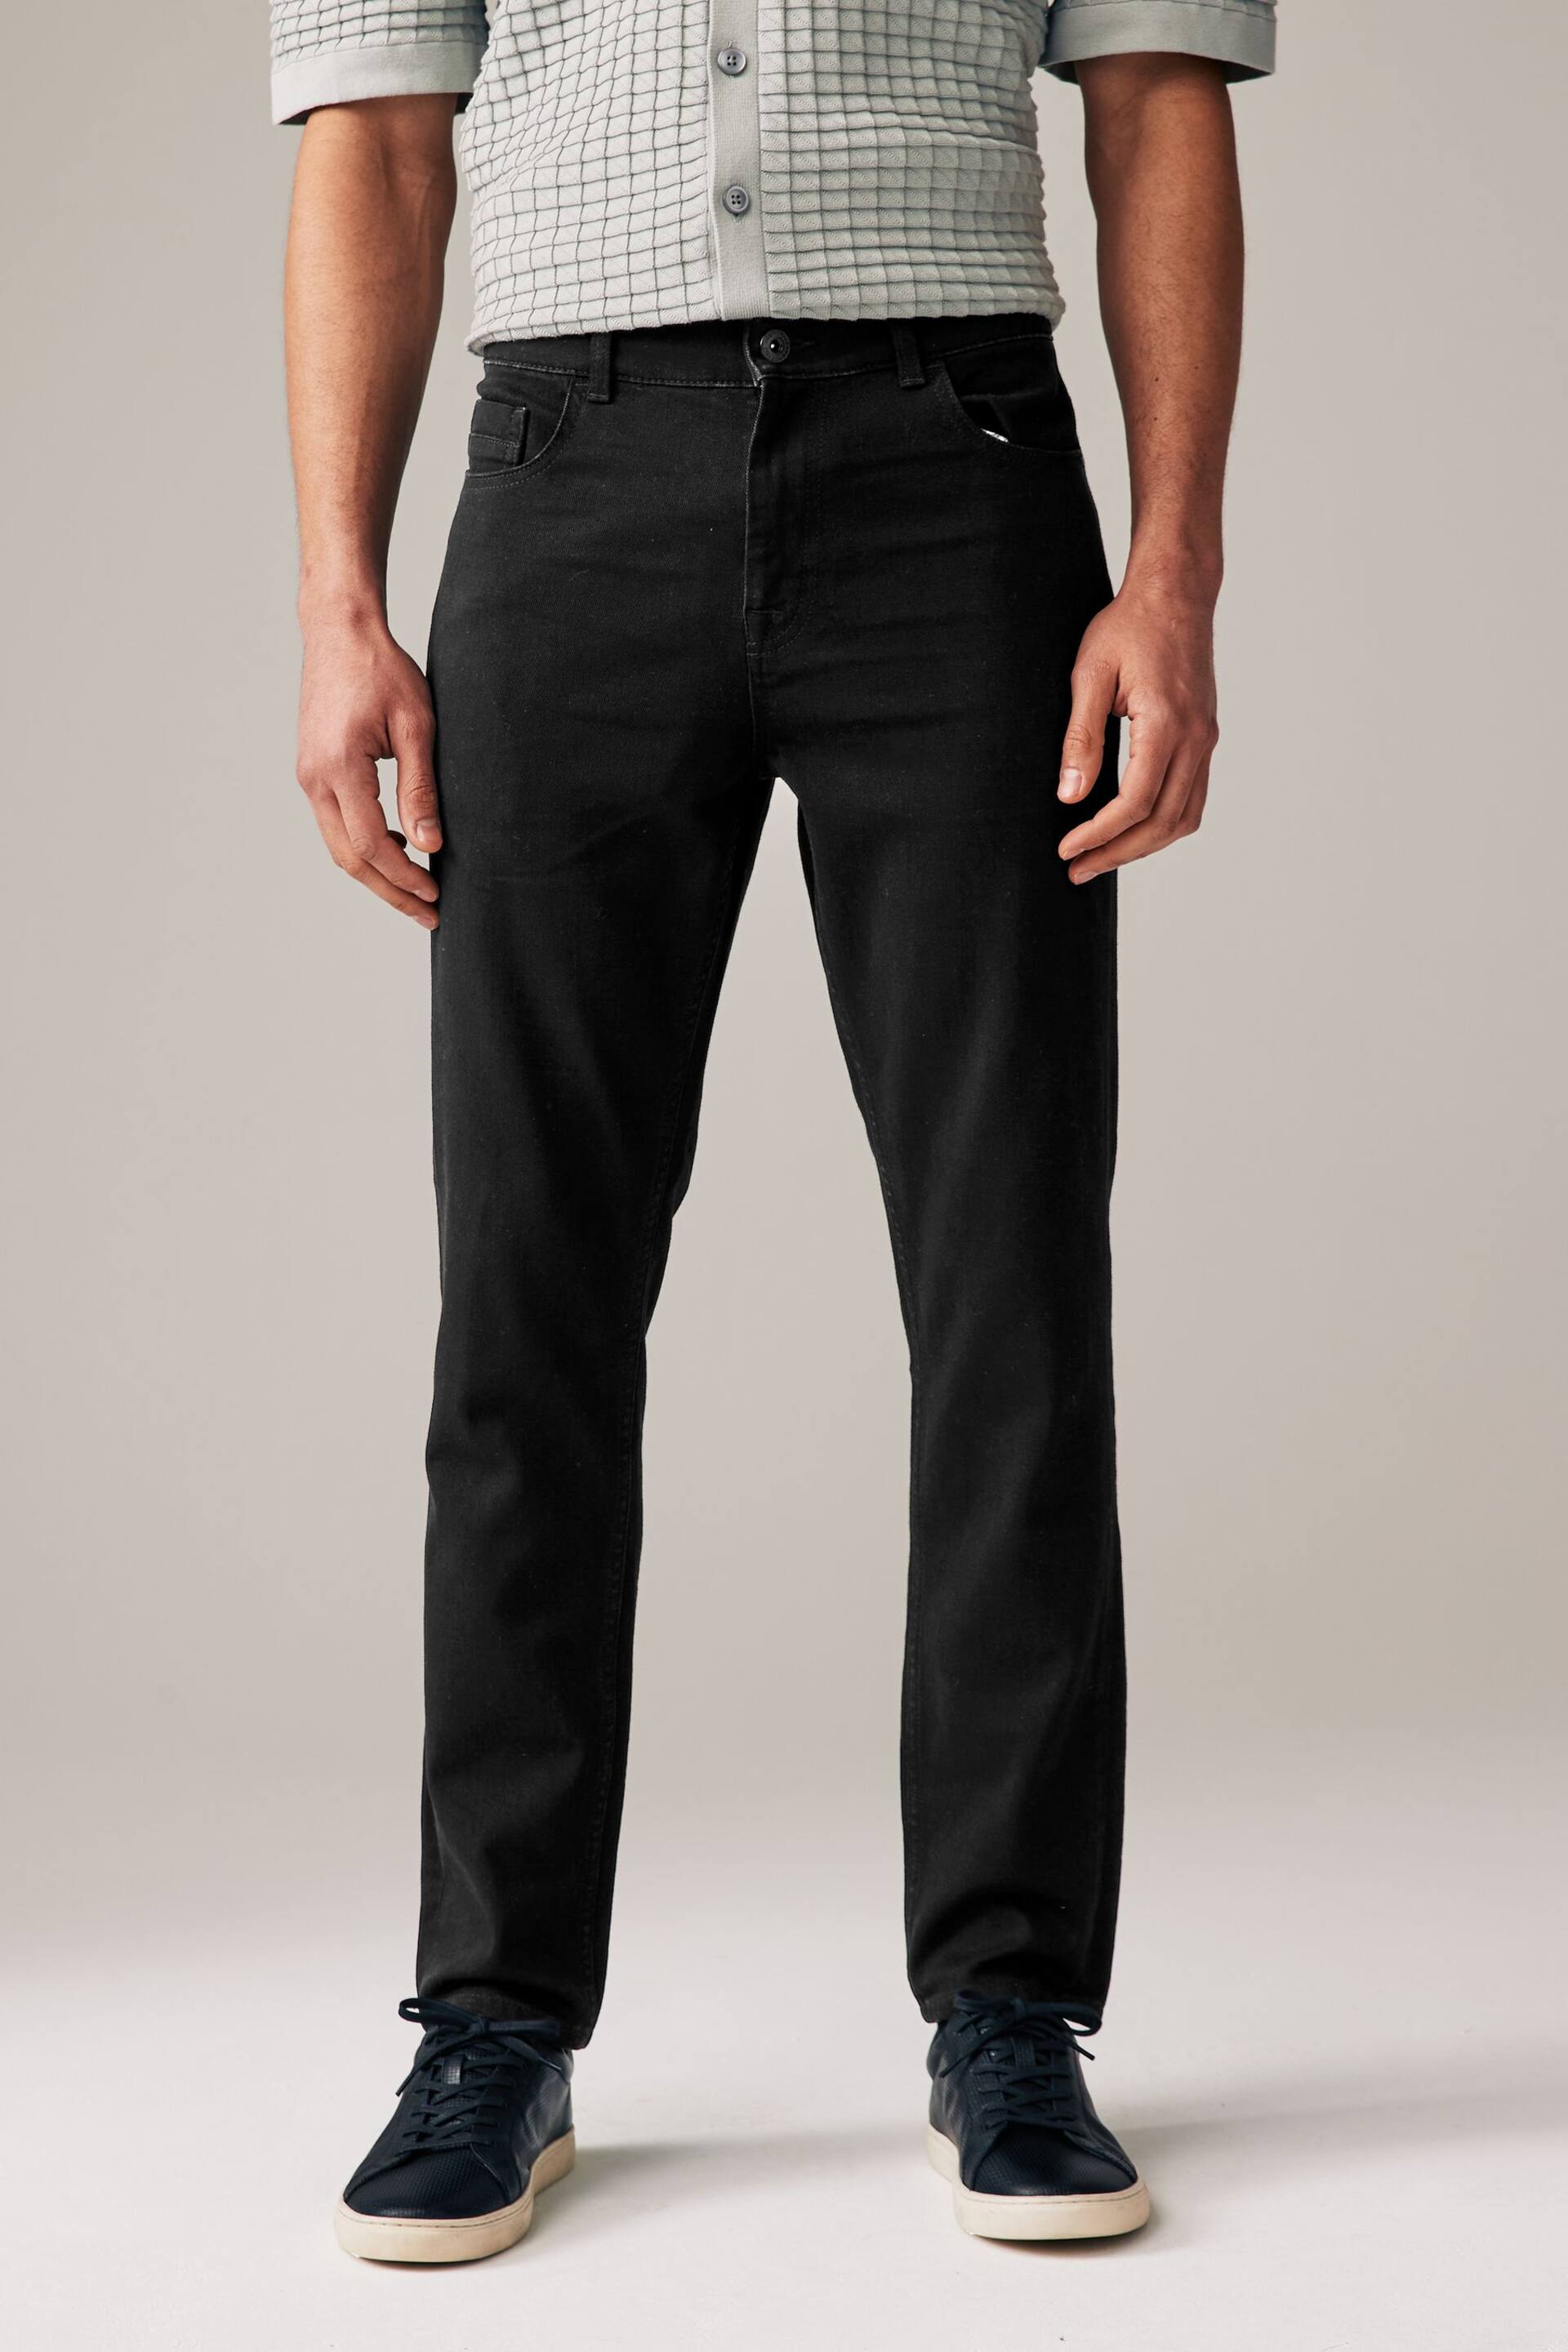 Black Lightweight Jeans - Image 4 of 7